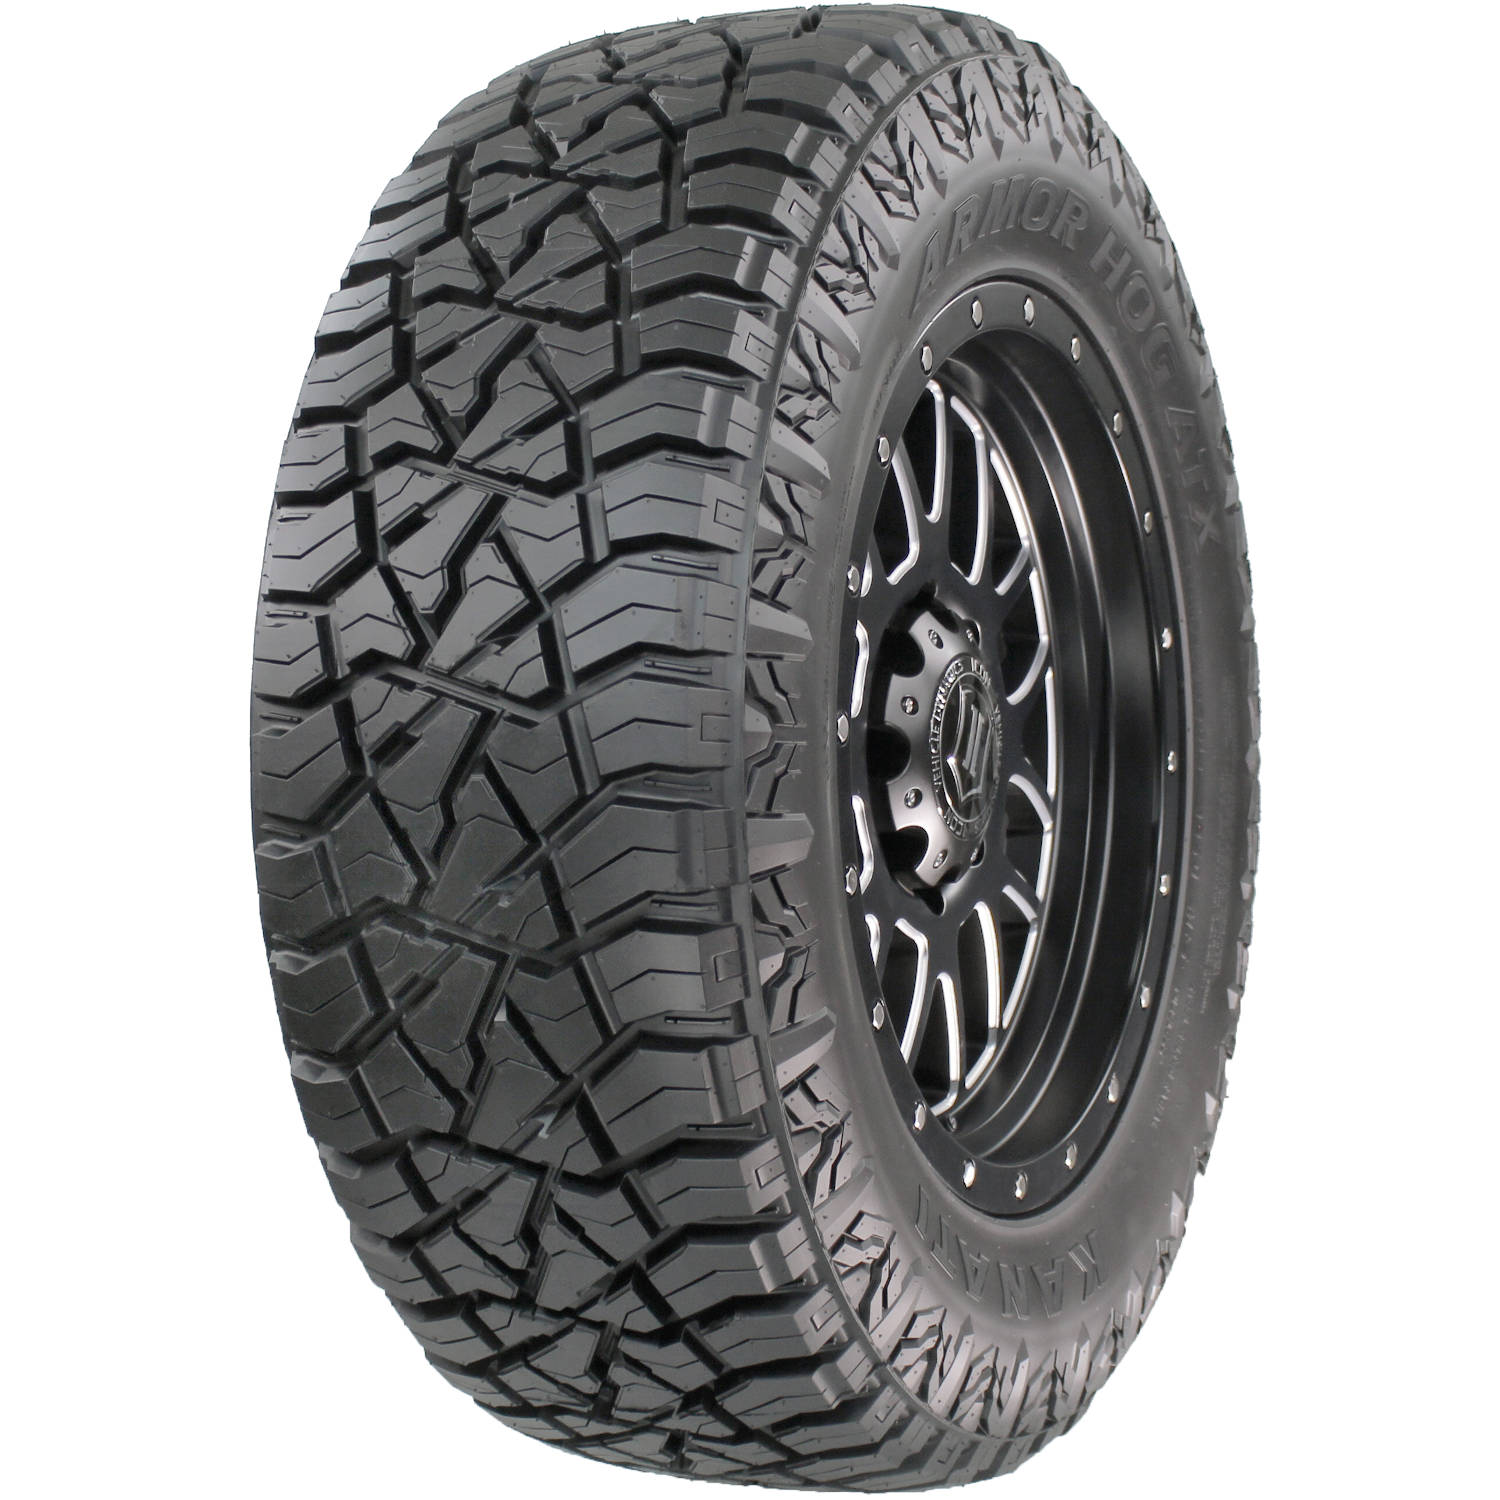 KANATI ARMOR HOG ATX LT235/80R17 (31.9X9.3R 17) Tires